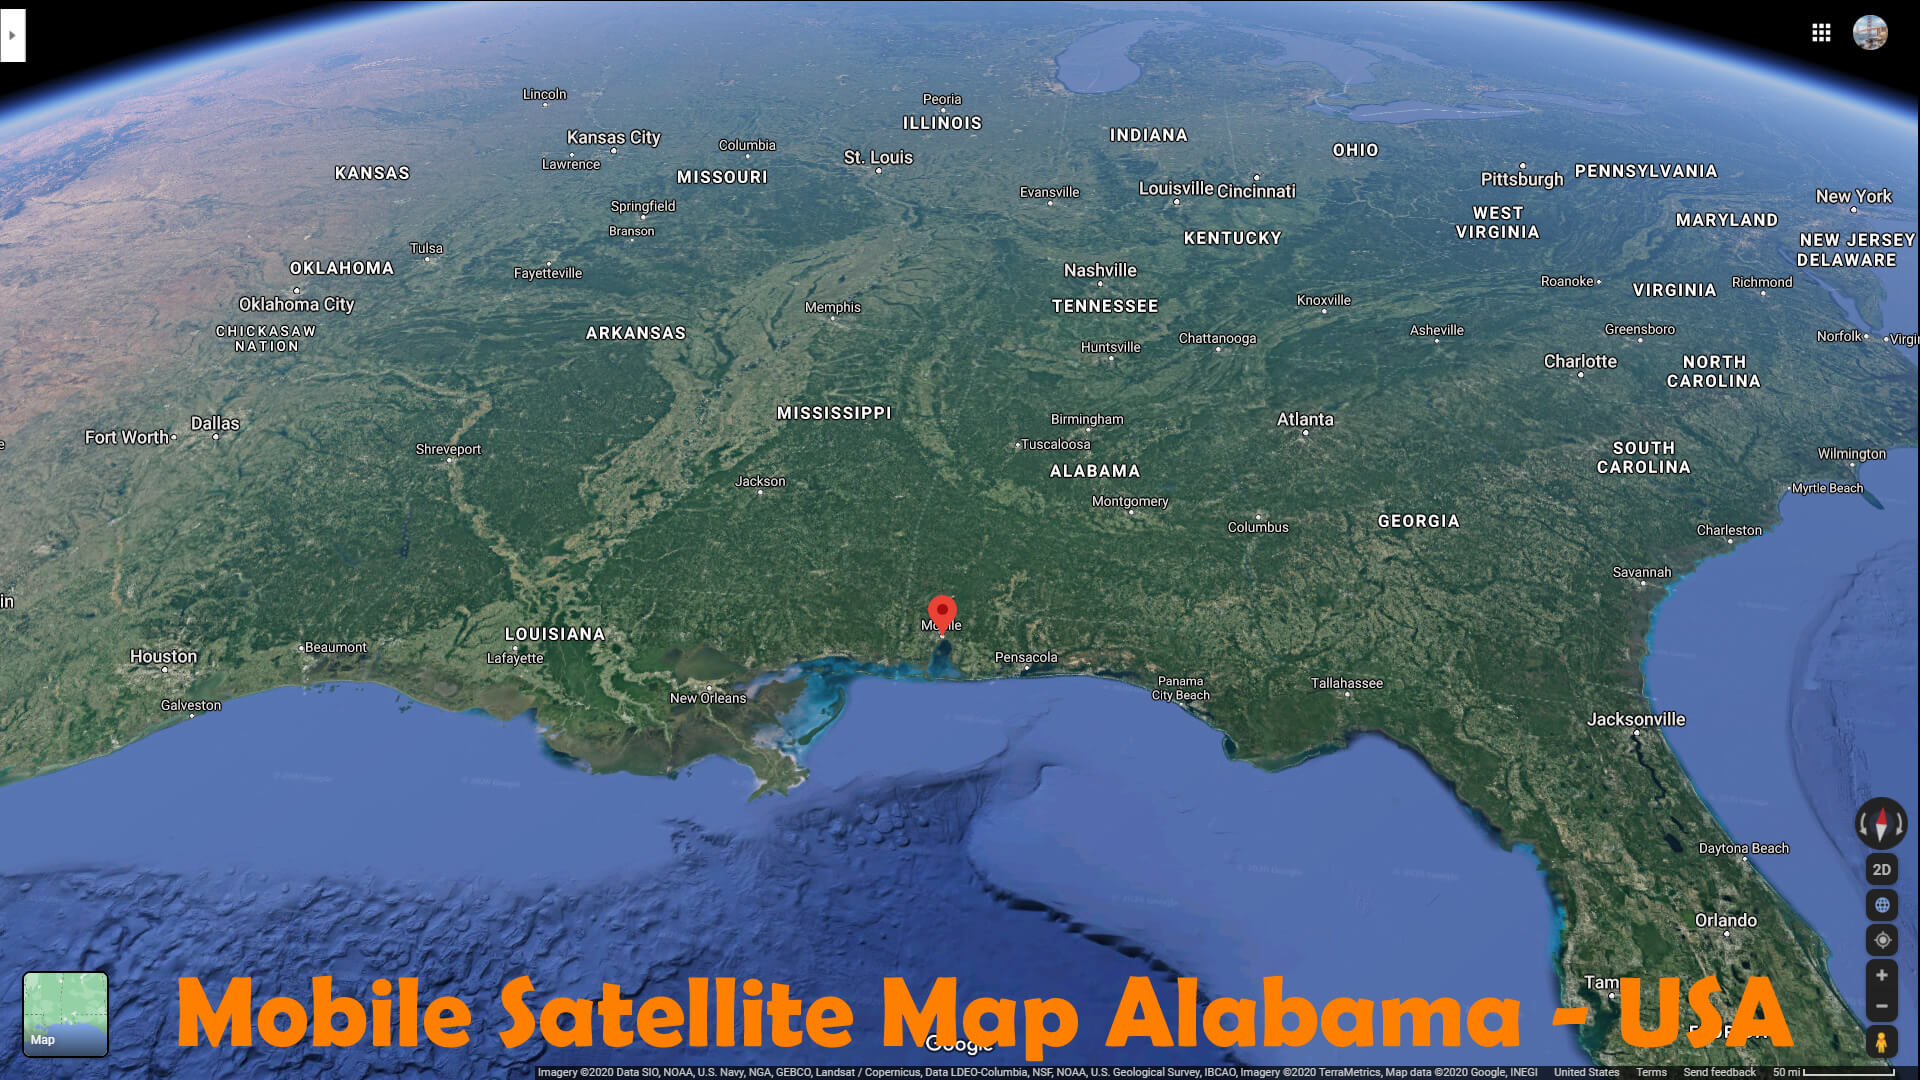 Mobile Satellite Map Alabama   USA